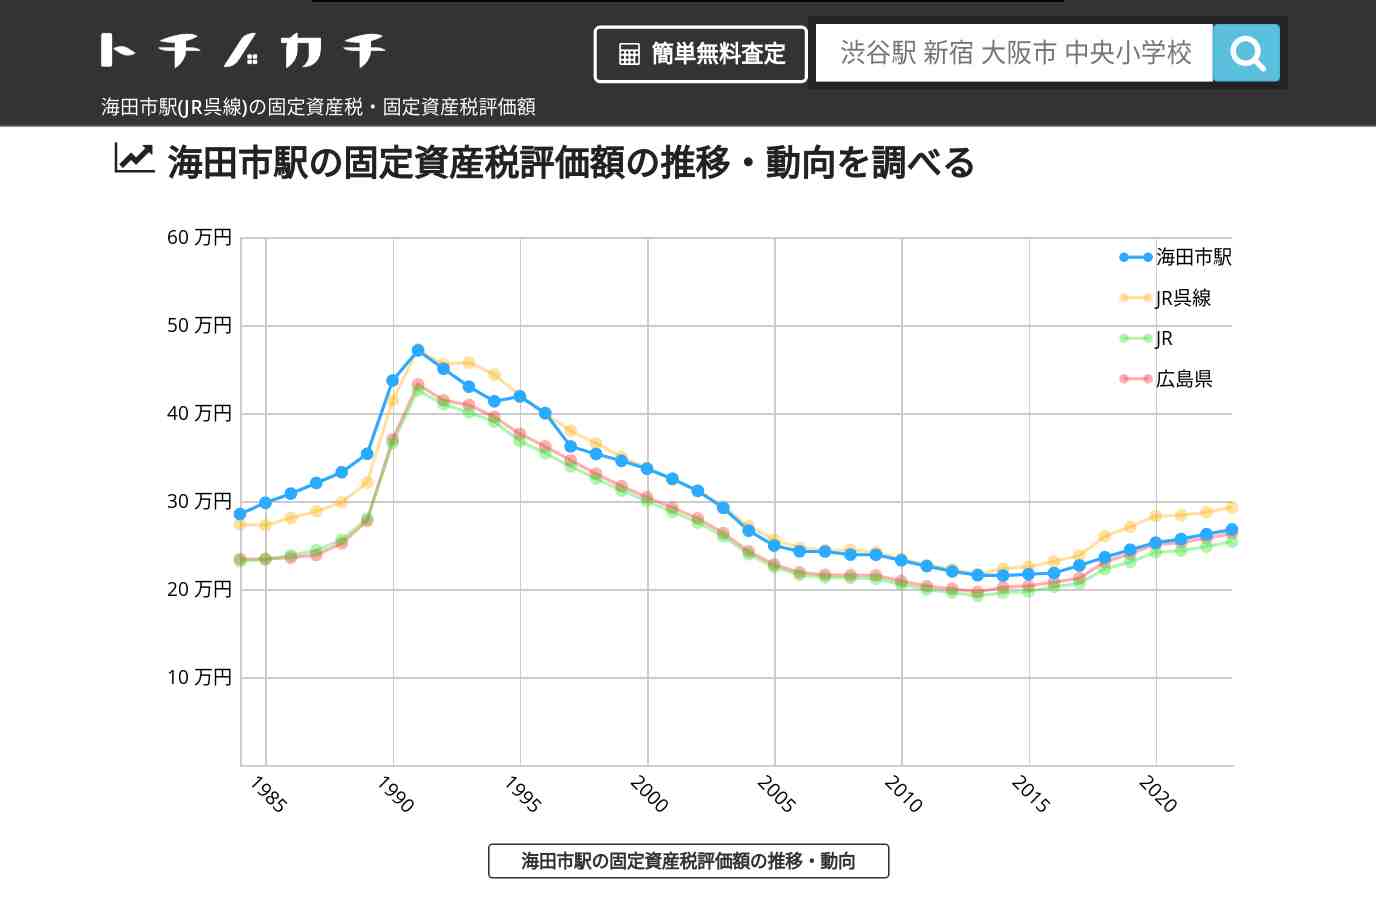 海田市駅(JR呉線)の固定資産税・固定資産税評価額 | トチノカチ